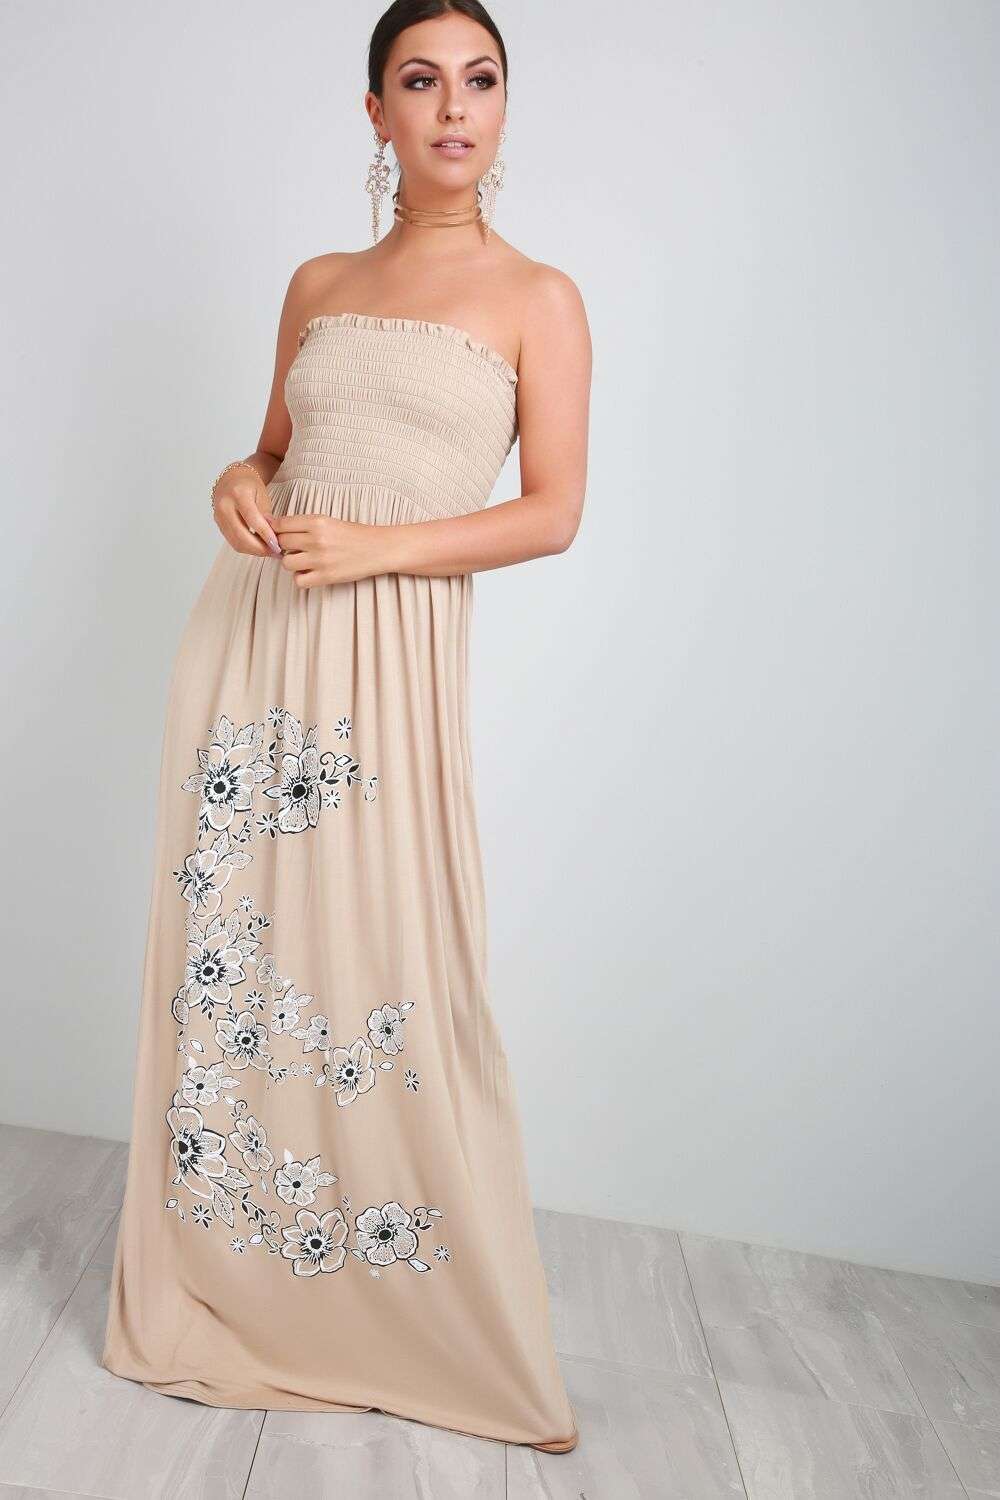 Jessi Sheering Bardot Floral Print Maxi Dress - bejealous-com